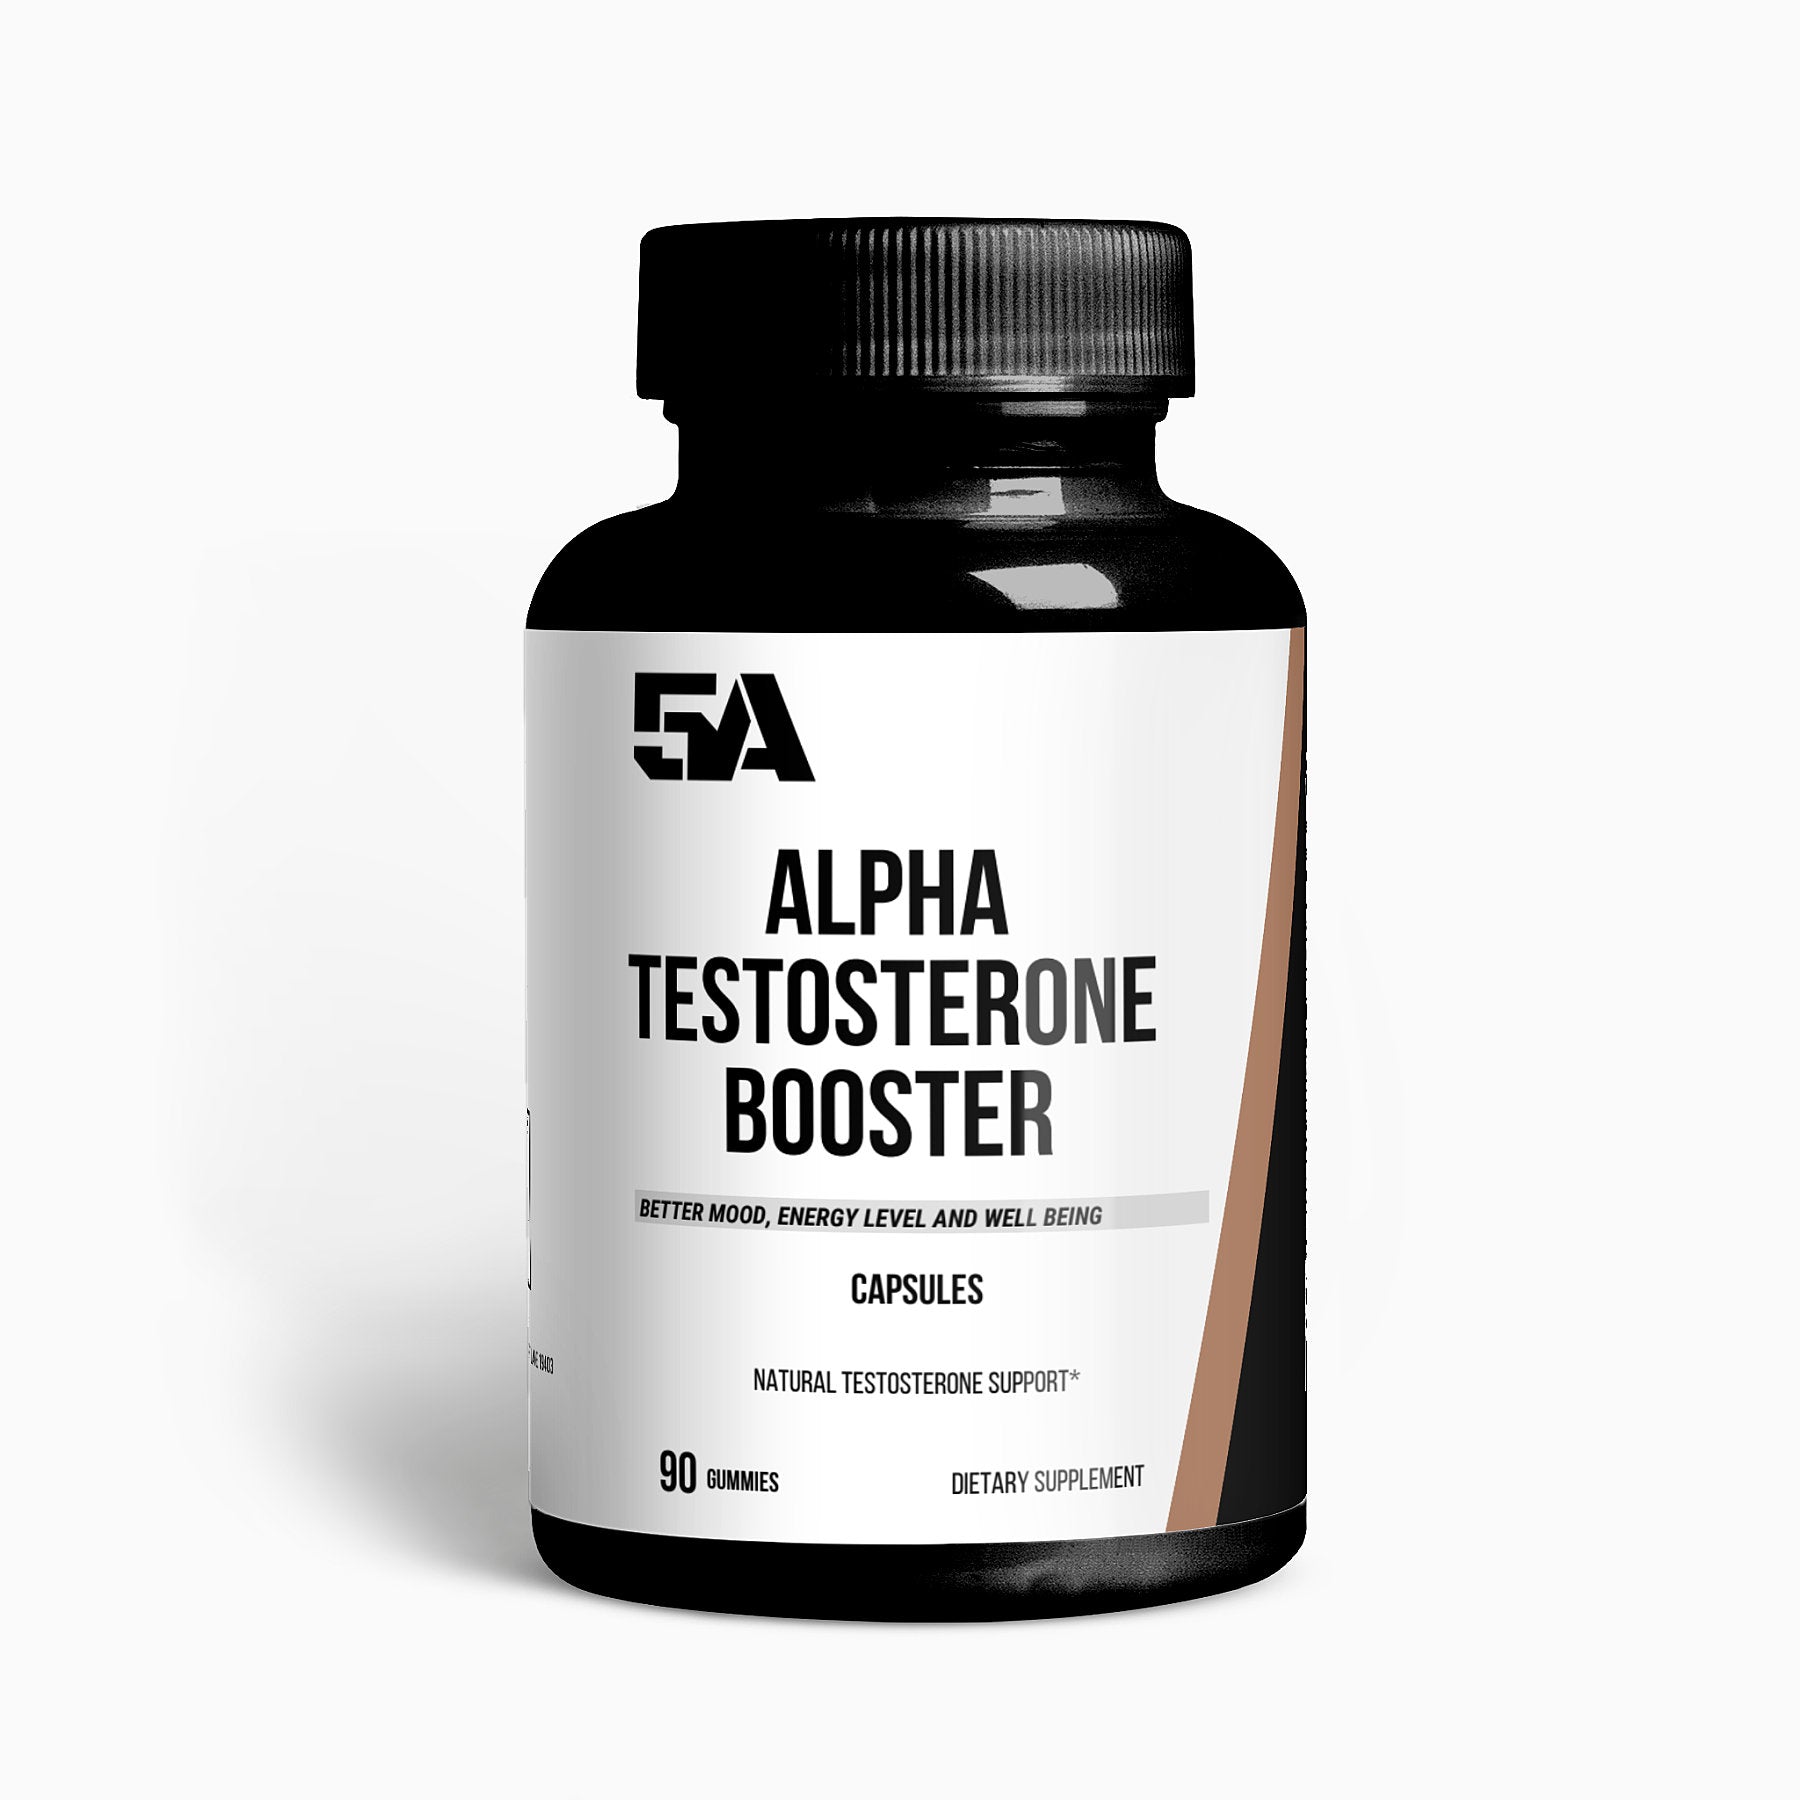 ALPHA Testosterone Booster